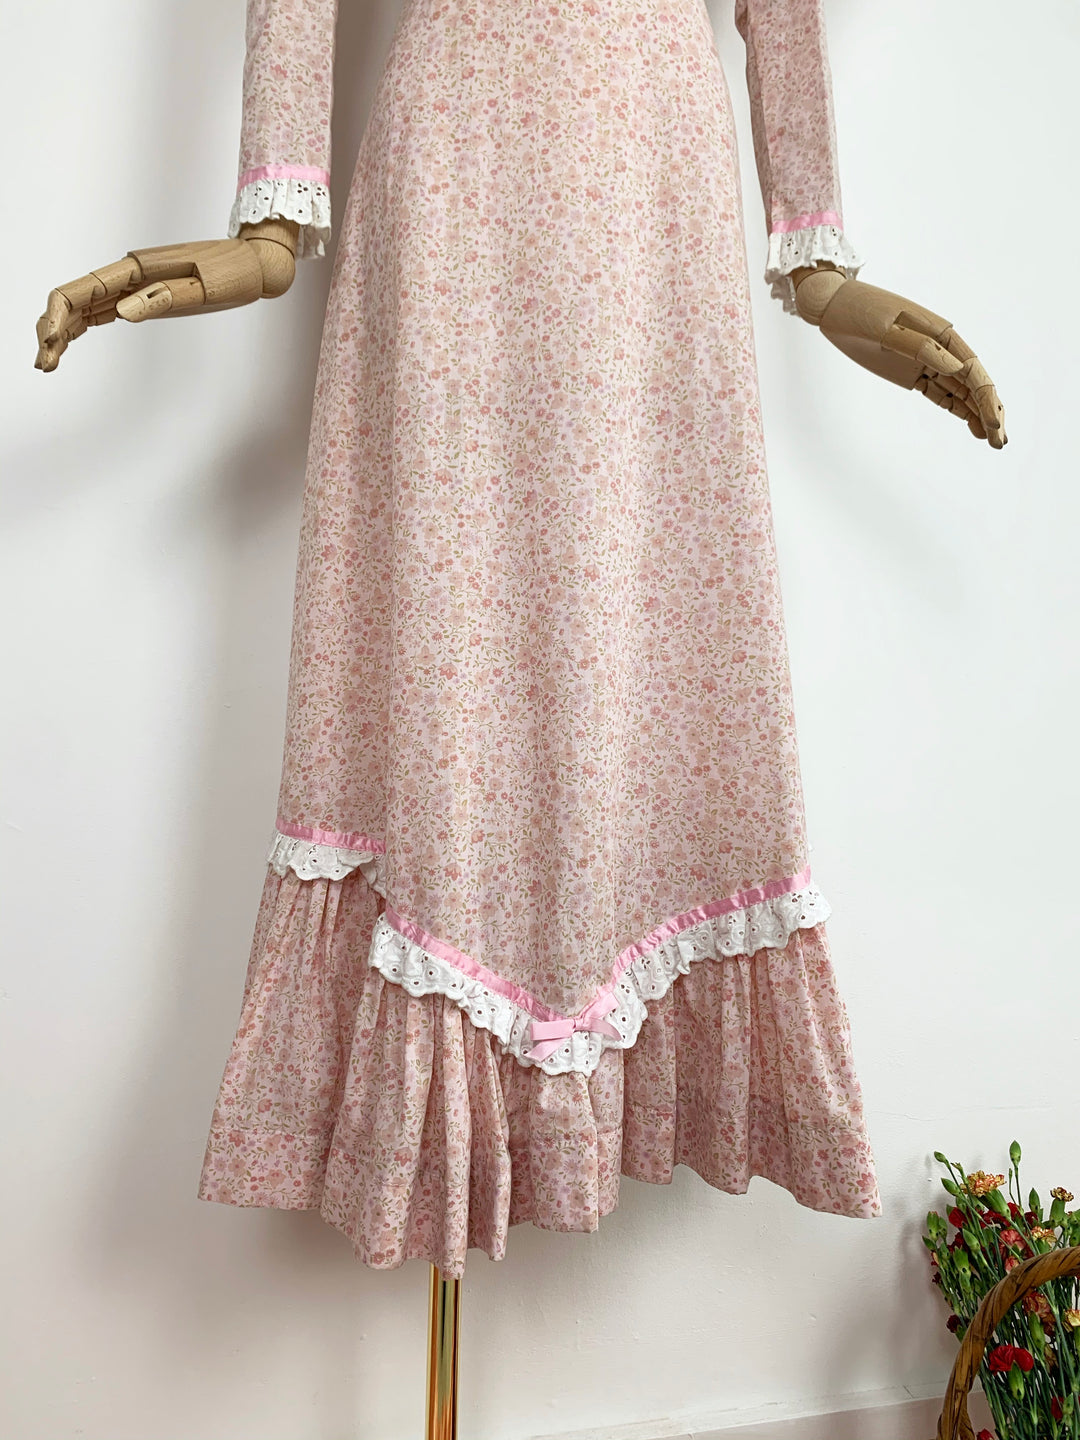 The Amelie Dress